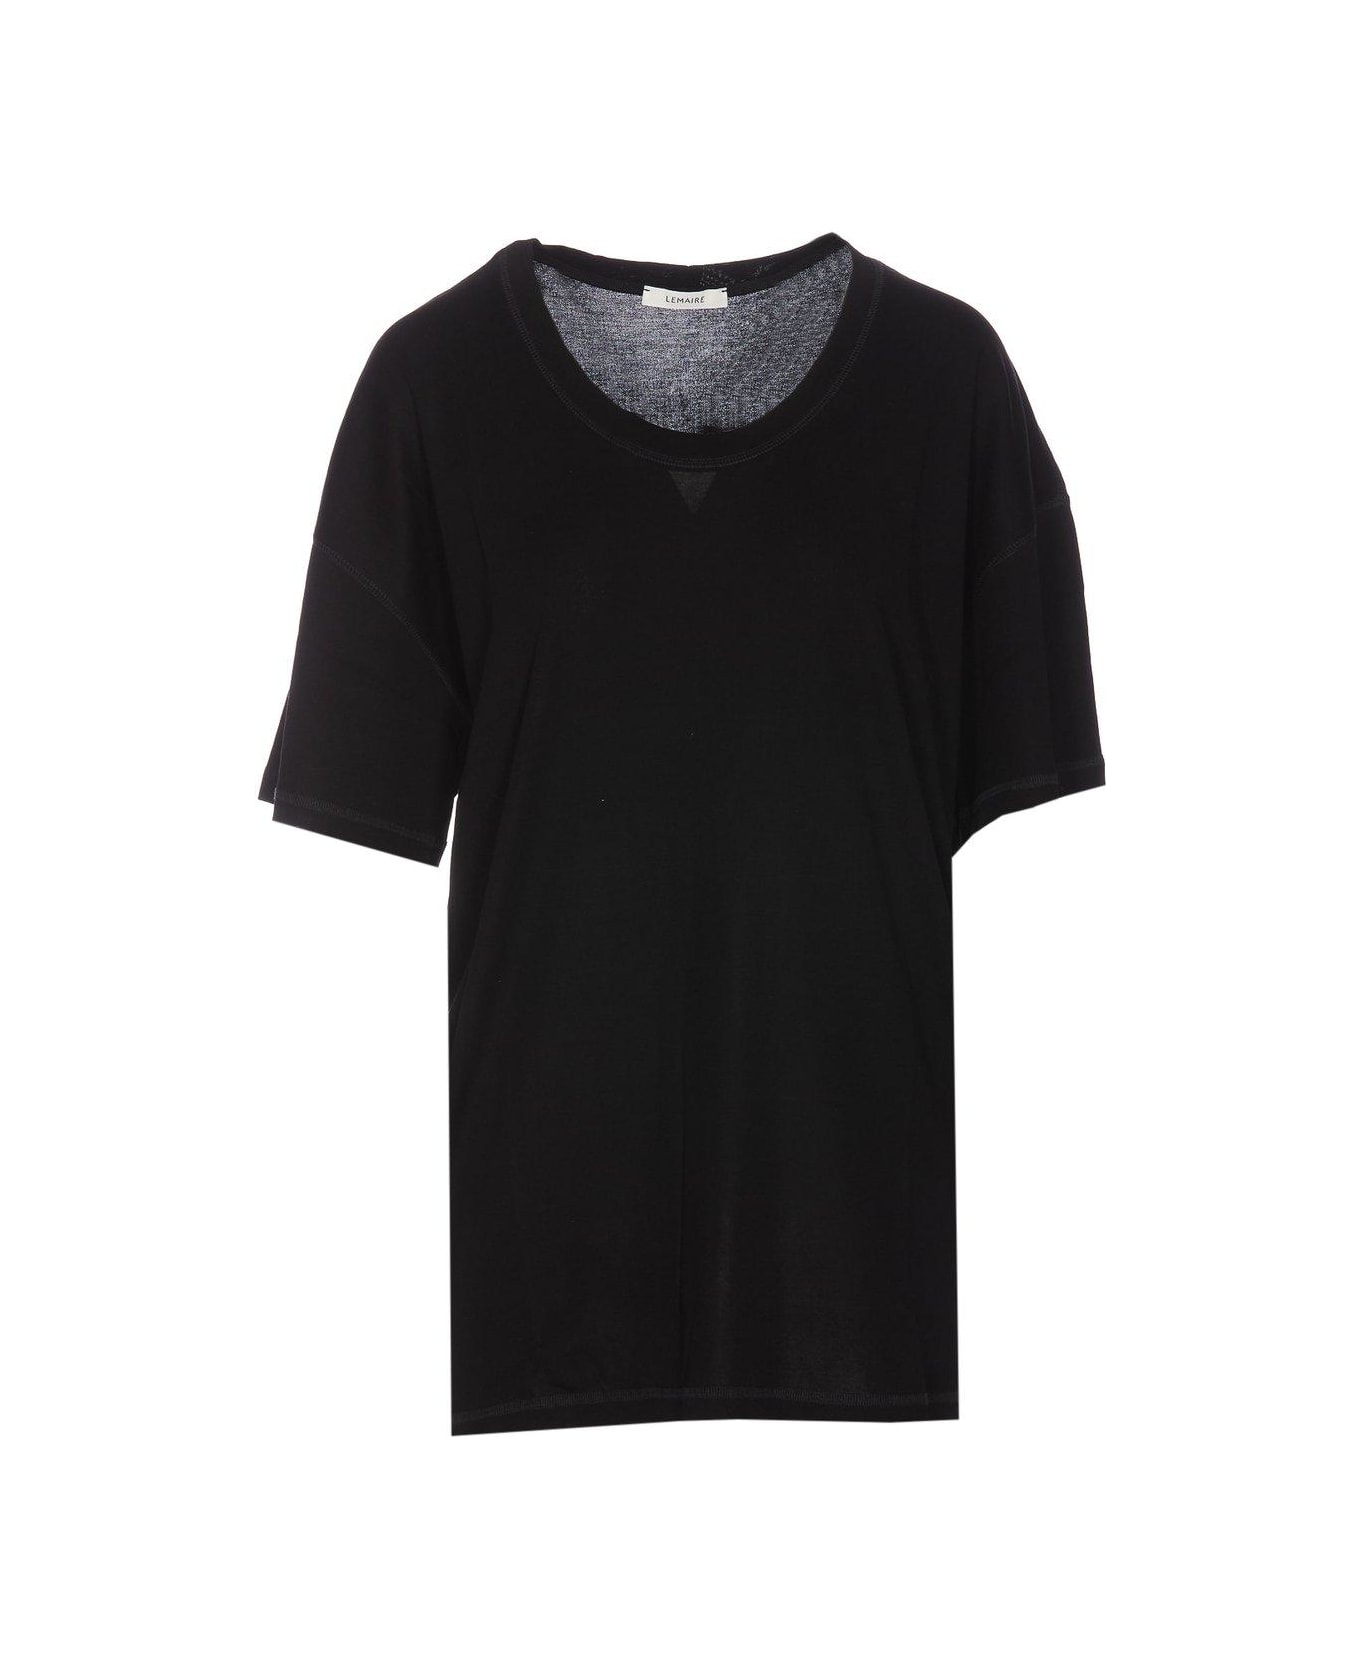 Lemaire Short-sleeved Scoop-neck T-shirt - Black Tシャツ